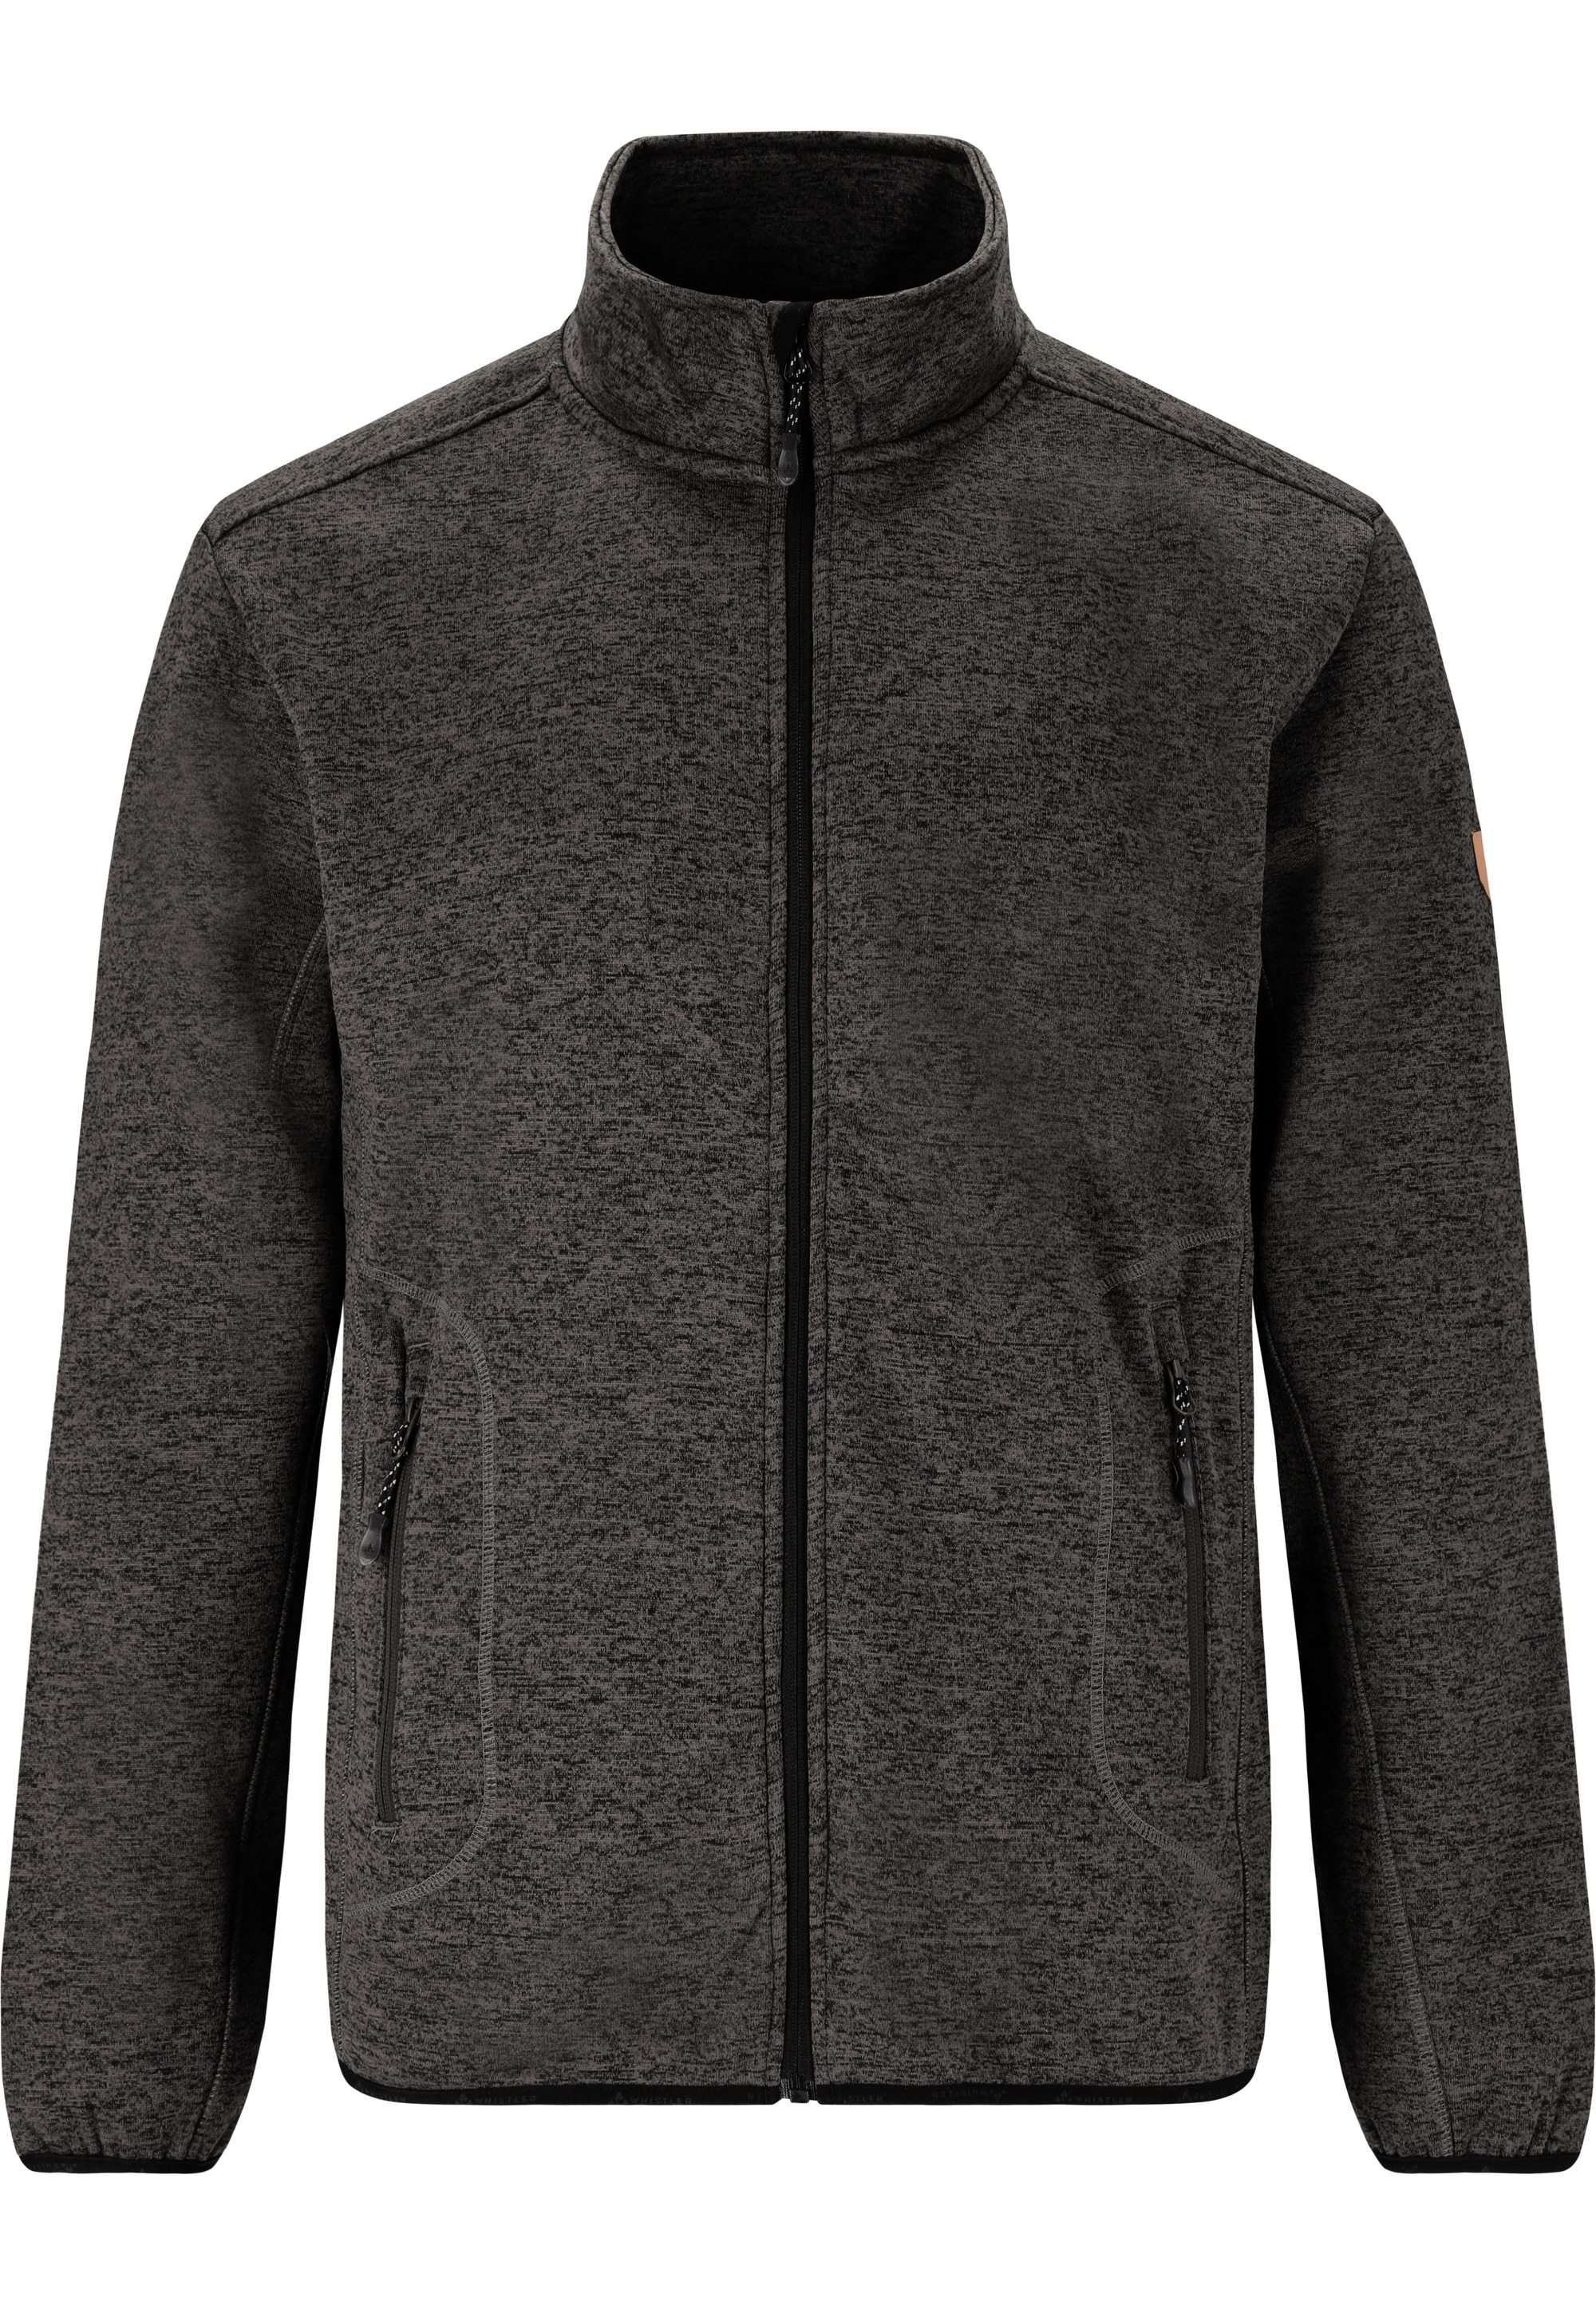 Флисовая куртка Whistler Sampton, цвет 1011A Dark Grey Melange